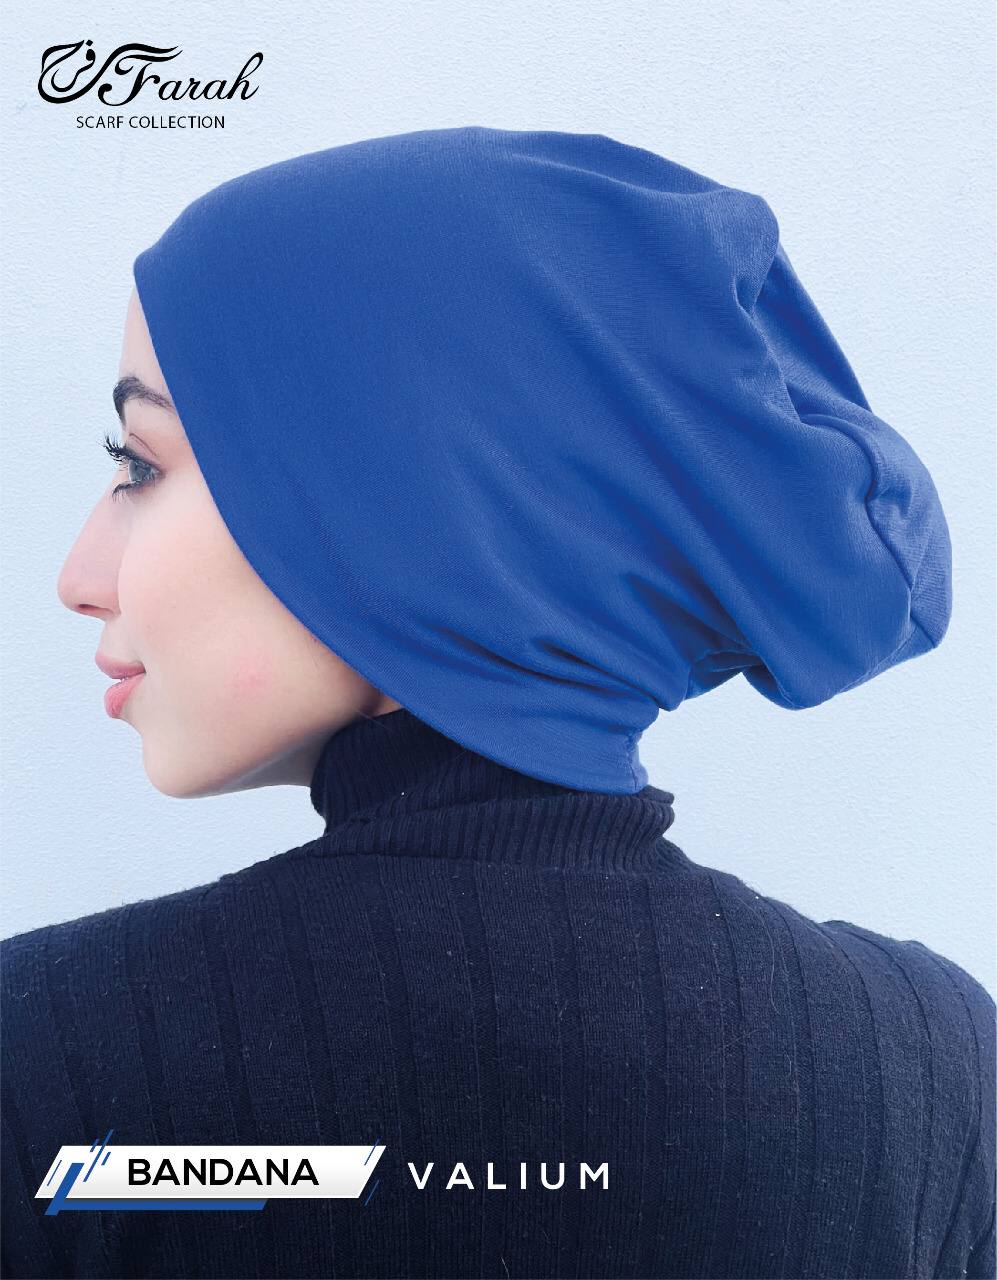 No-Thread Volume Close-End Underscarf Hijab Bandana - Cotton-Lycra Blend for Stylish Comfort - Fun Blue